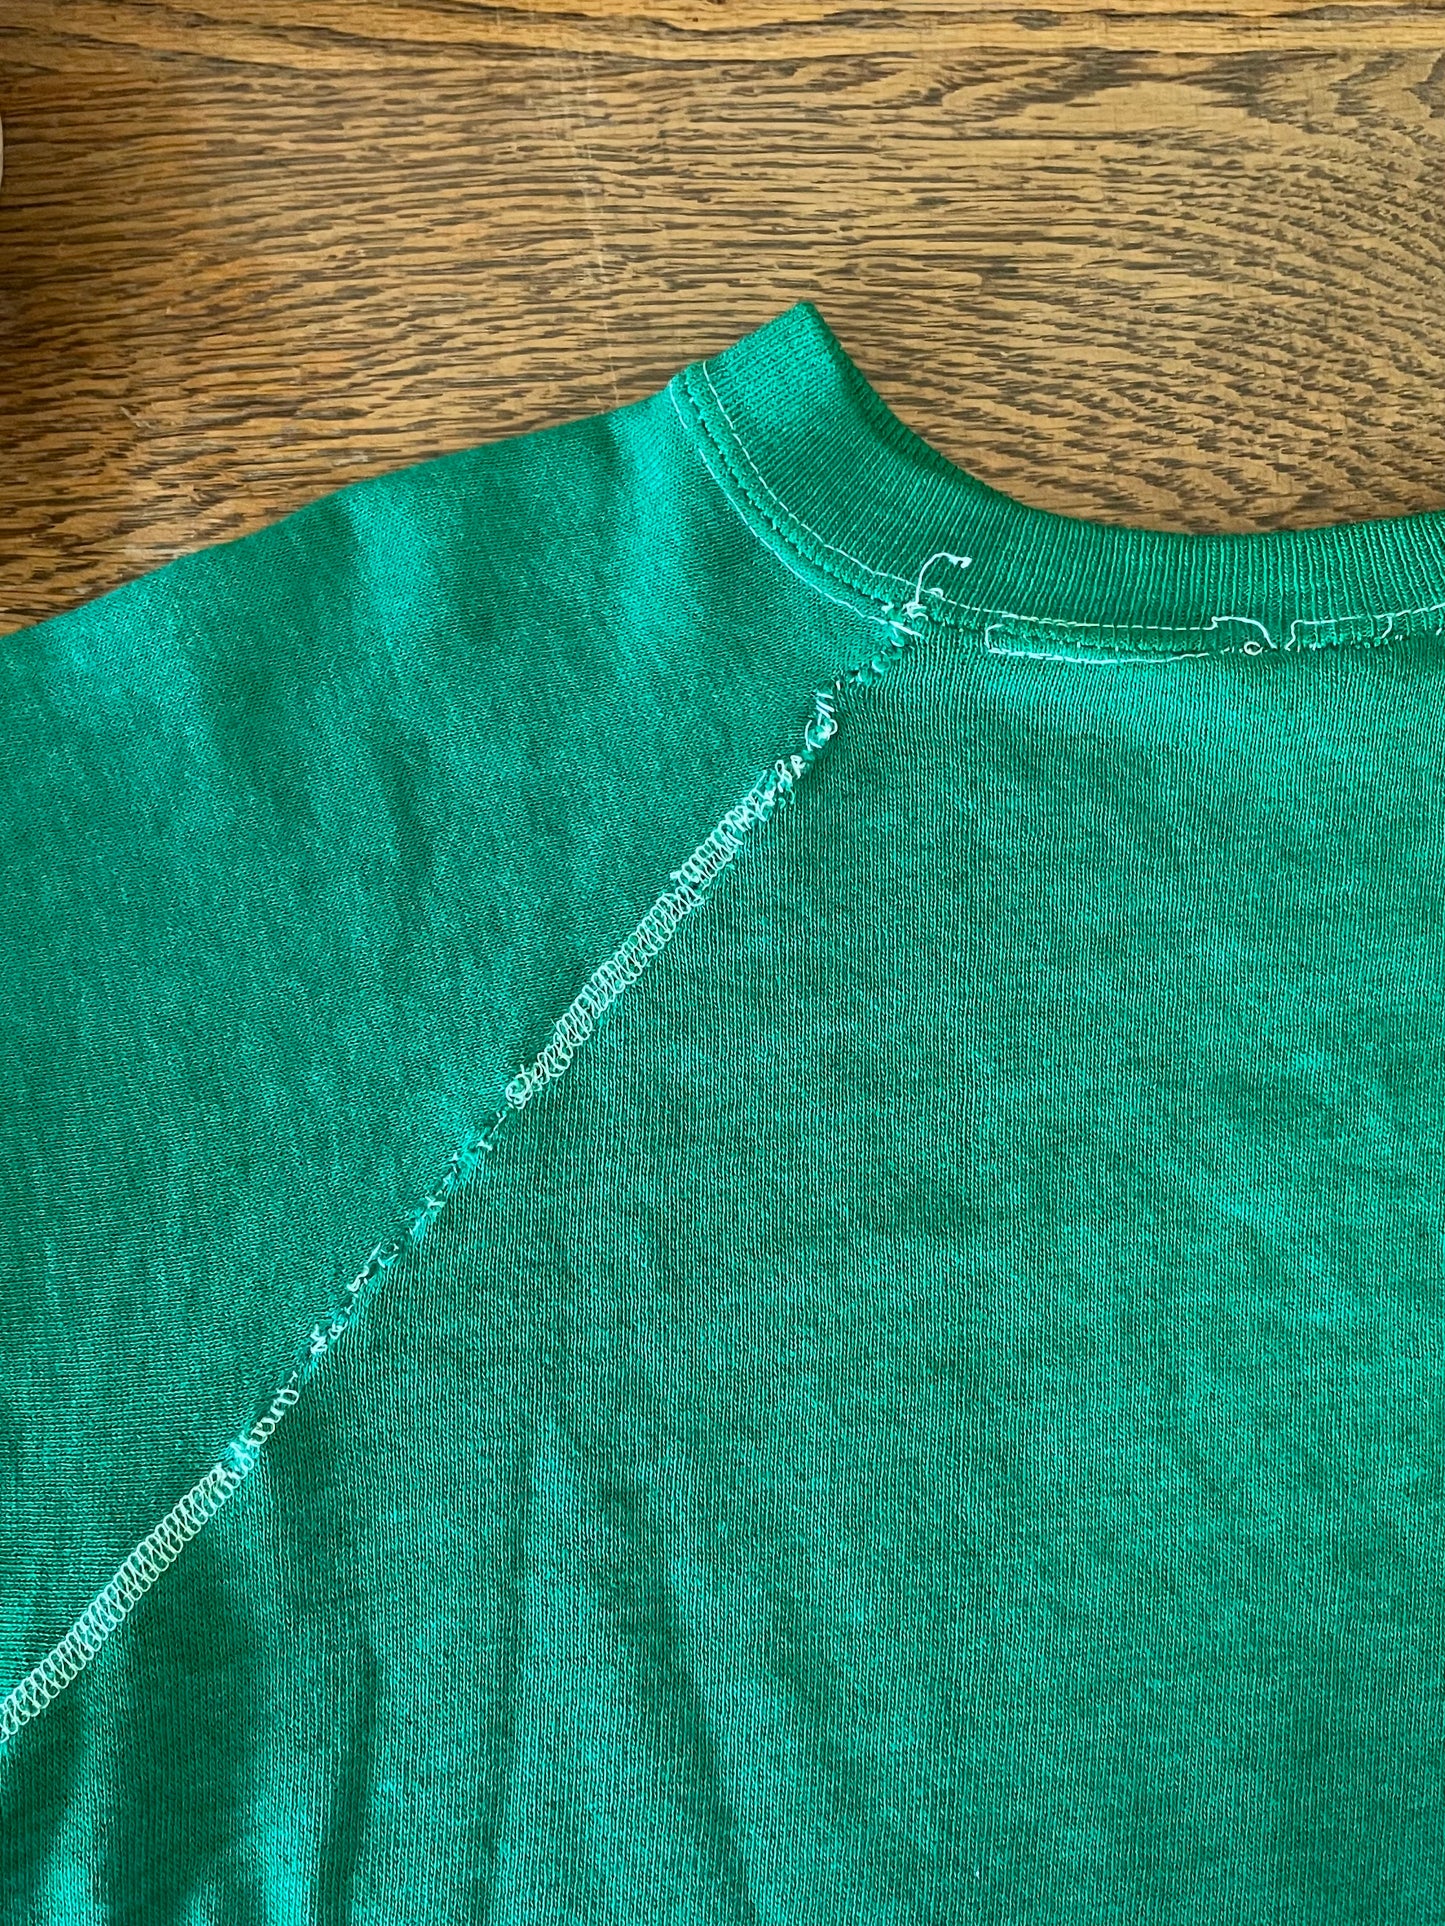 80s Due Process Stable Sweatshirt